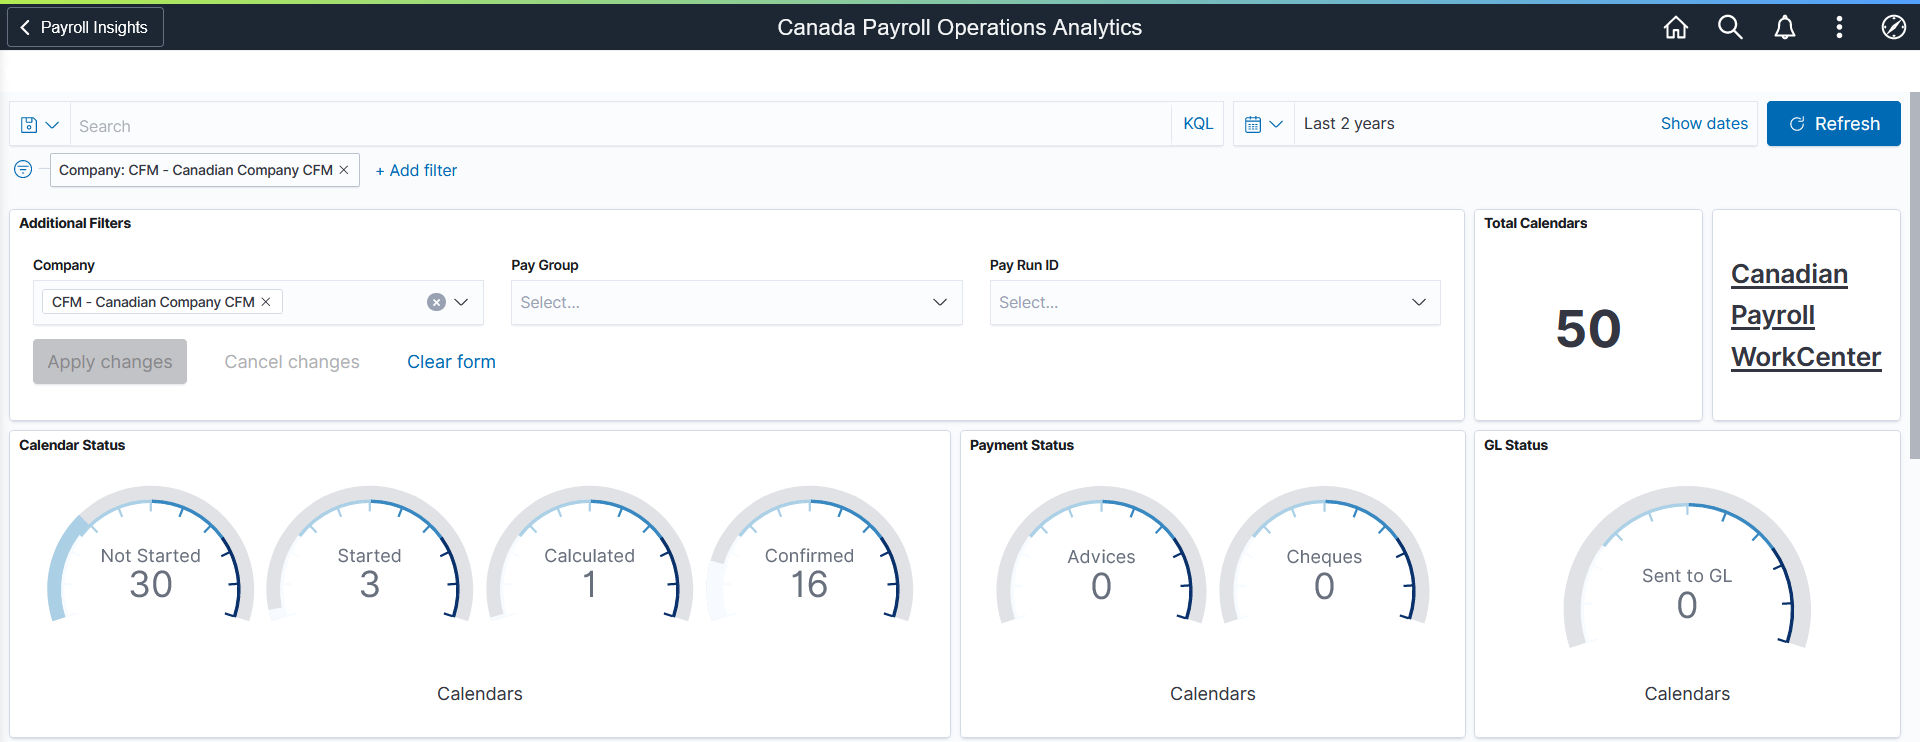 Canada Payroll Operations Analytics Dashboard (1 of 3)